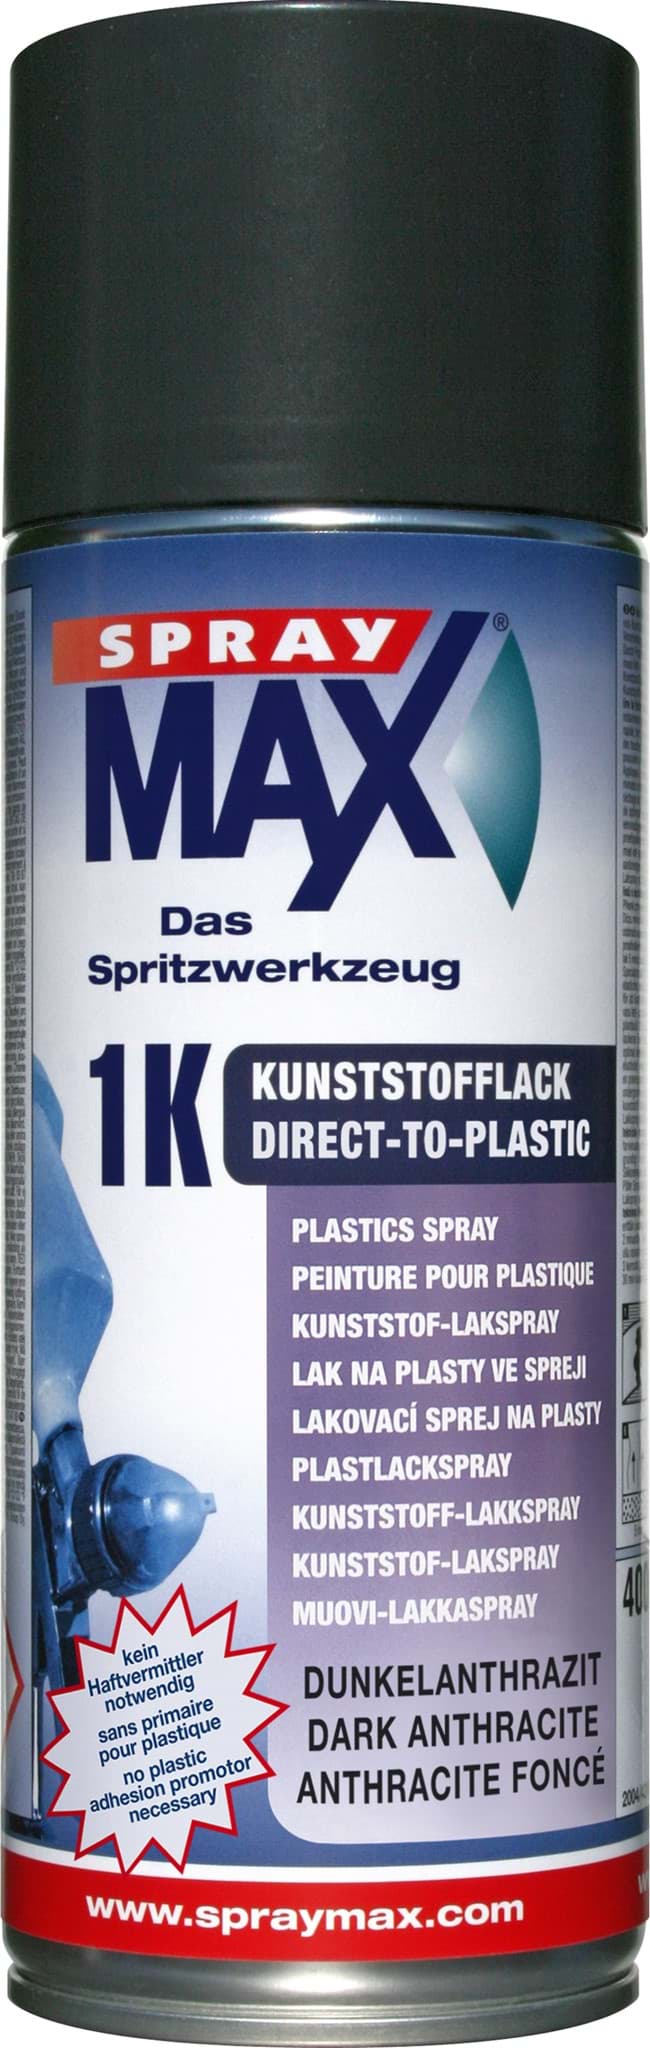 Afbeelding van SprayMax 1K DTP-Kunststofflack Dunkelanthrazit 400ml 680045